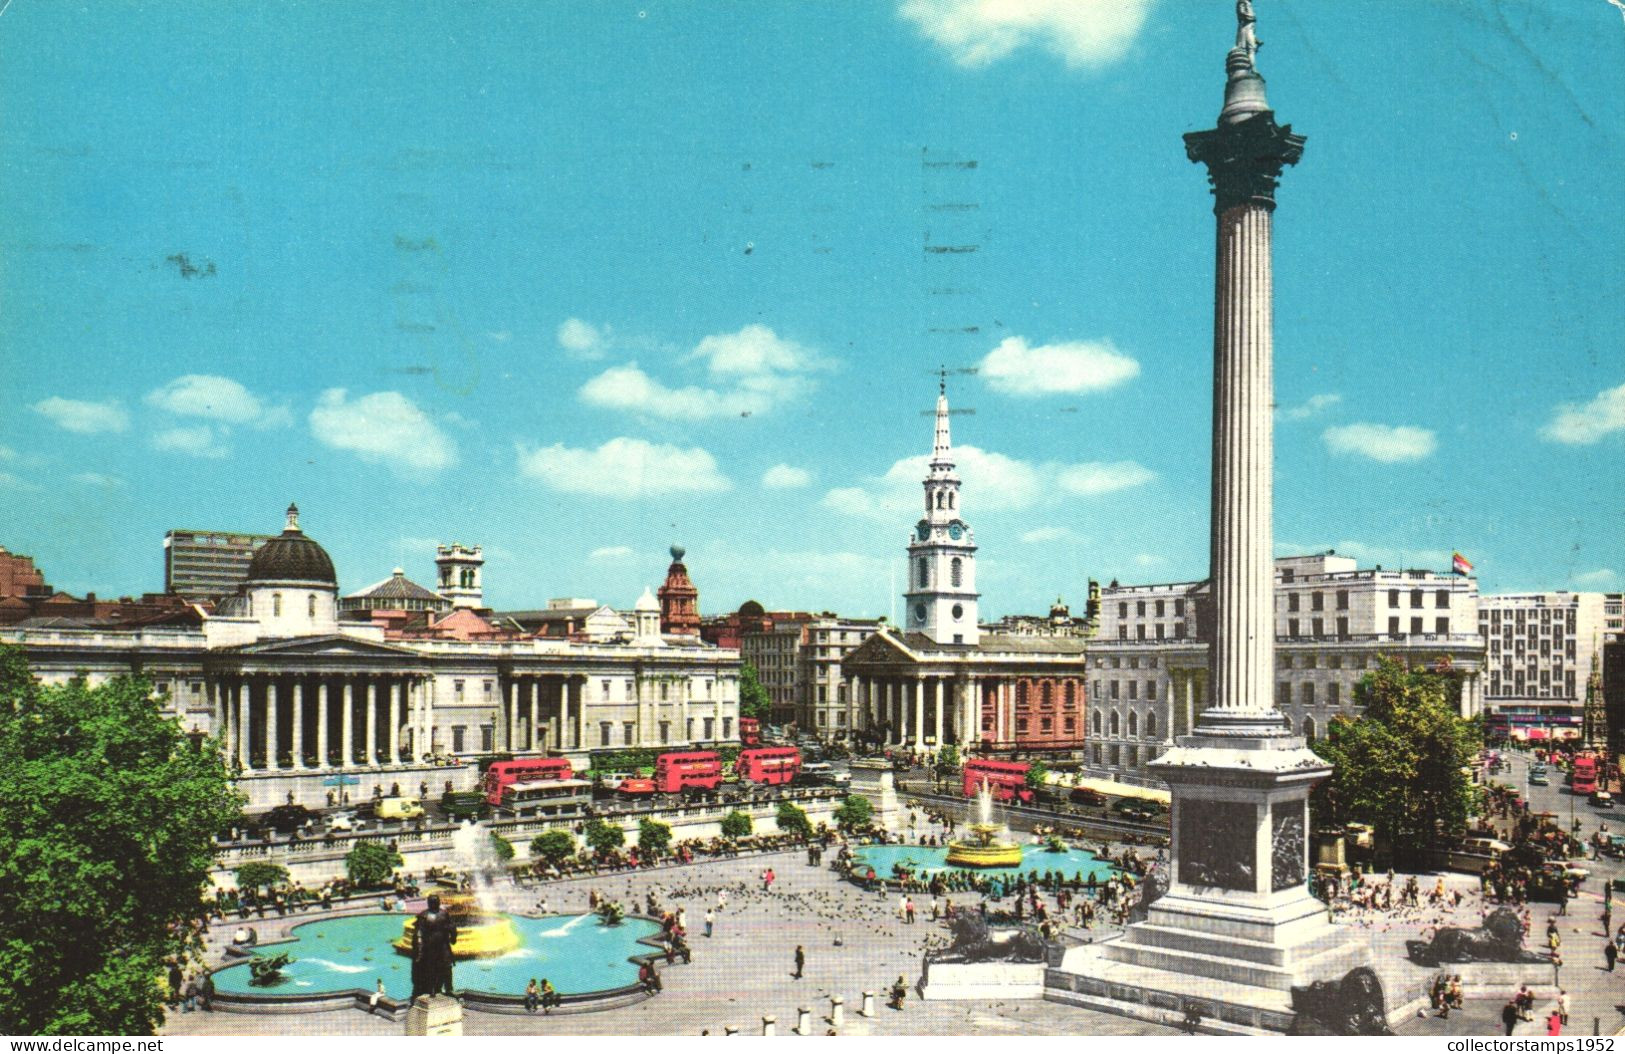 LONDON, TRAFALGAR SQUARE, ARCHITECTURE, TOWER WITH CLOCK, CHURCH, MONUMENT, FOUNTAIN, ENGLAND, UNITED KINGDOM, POSTCARD - Trafalgar Square